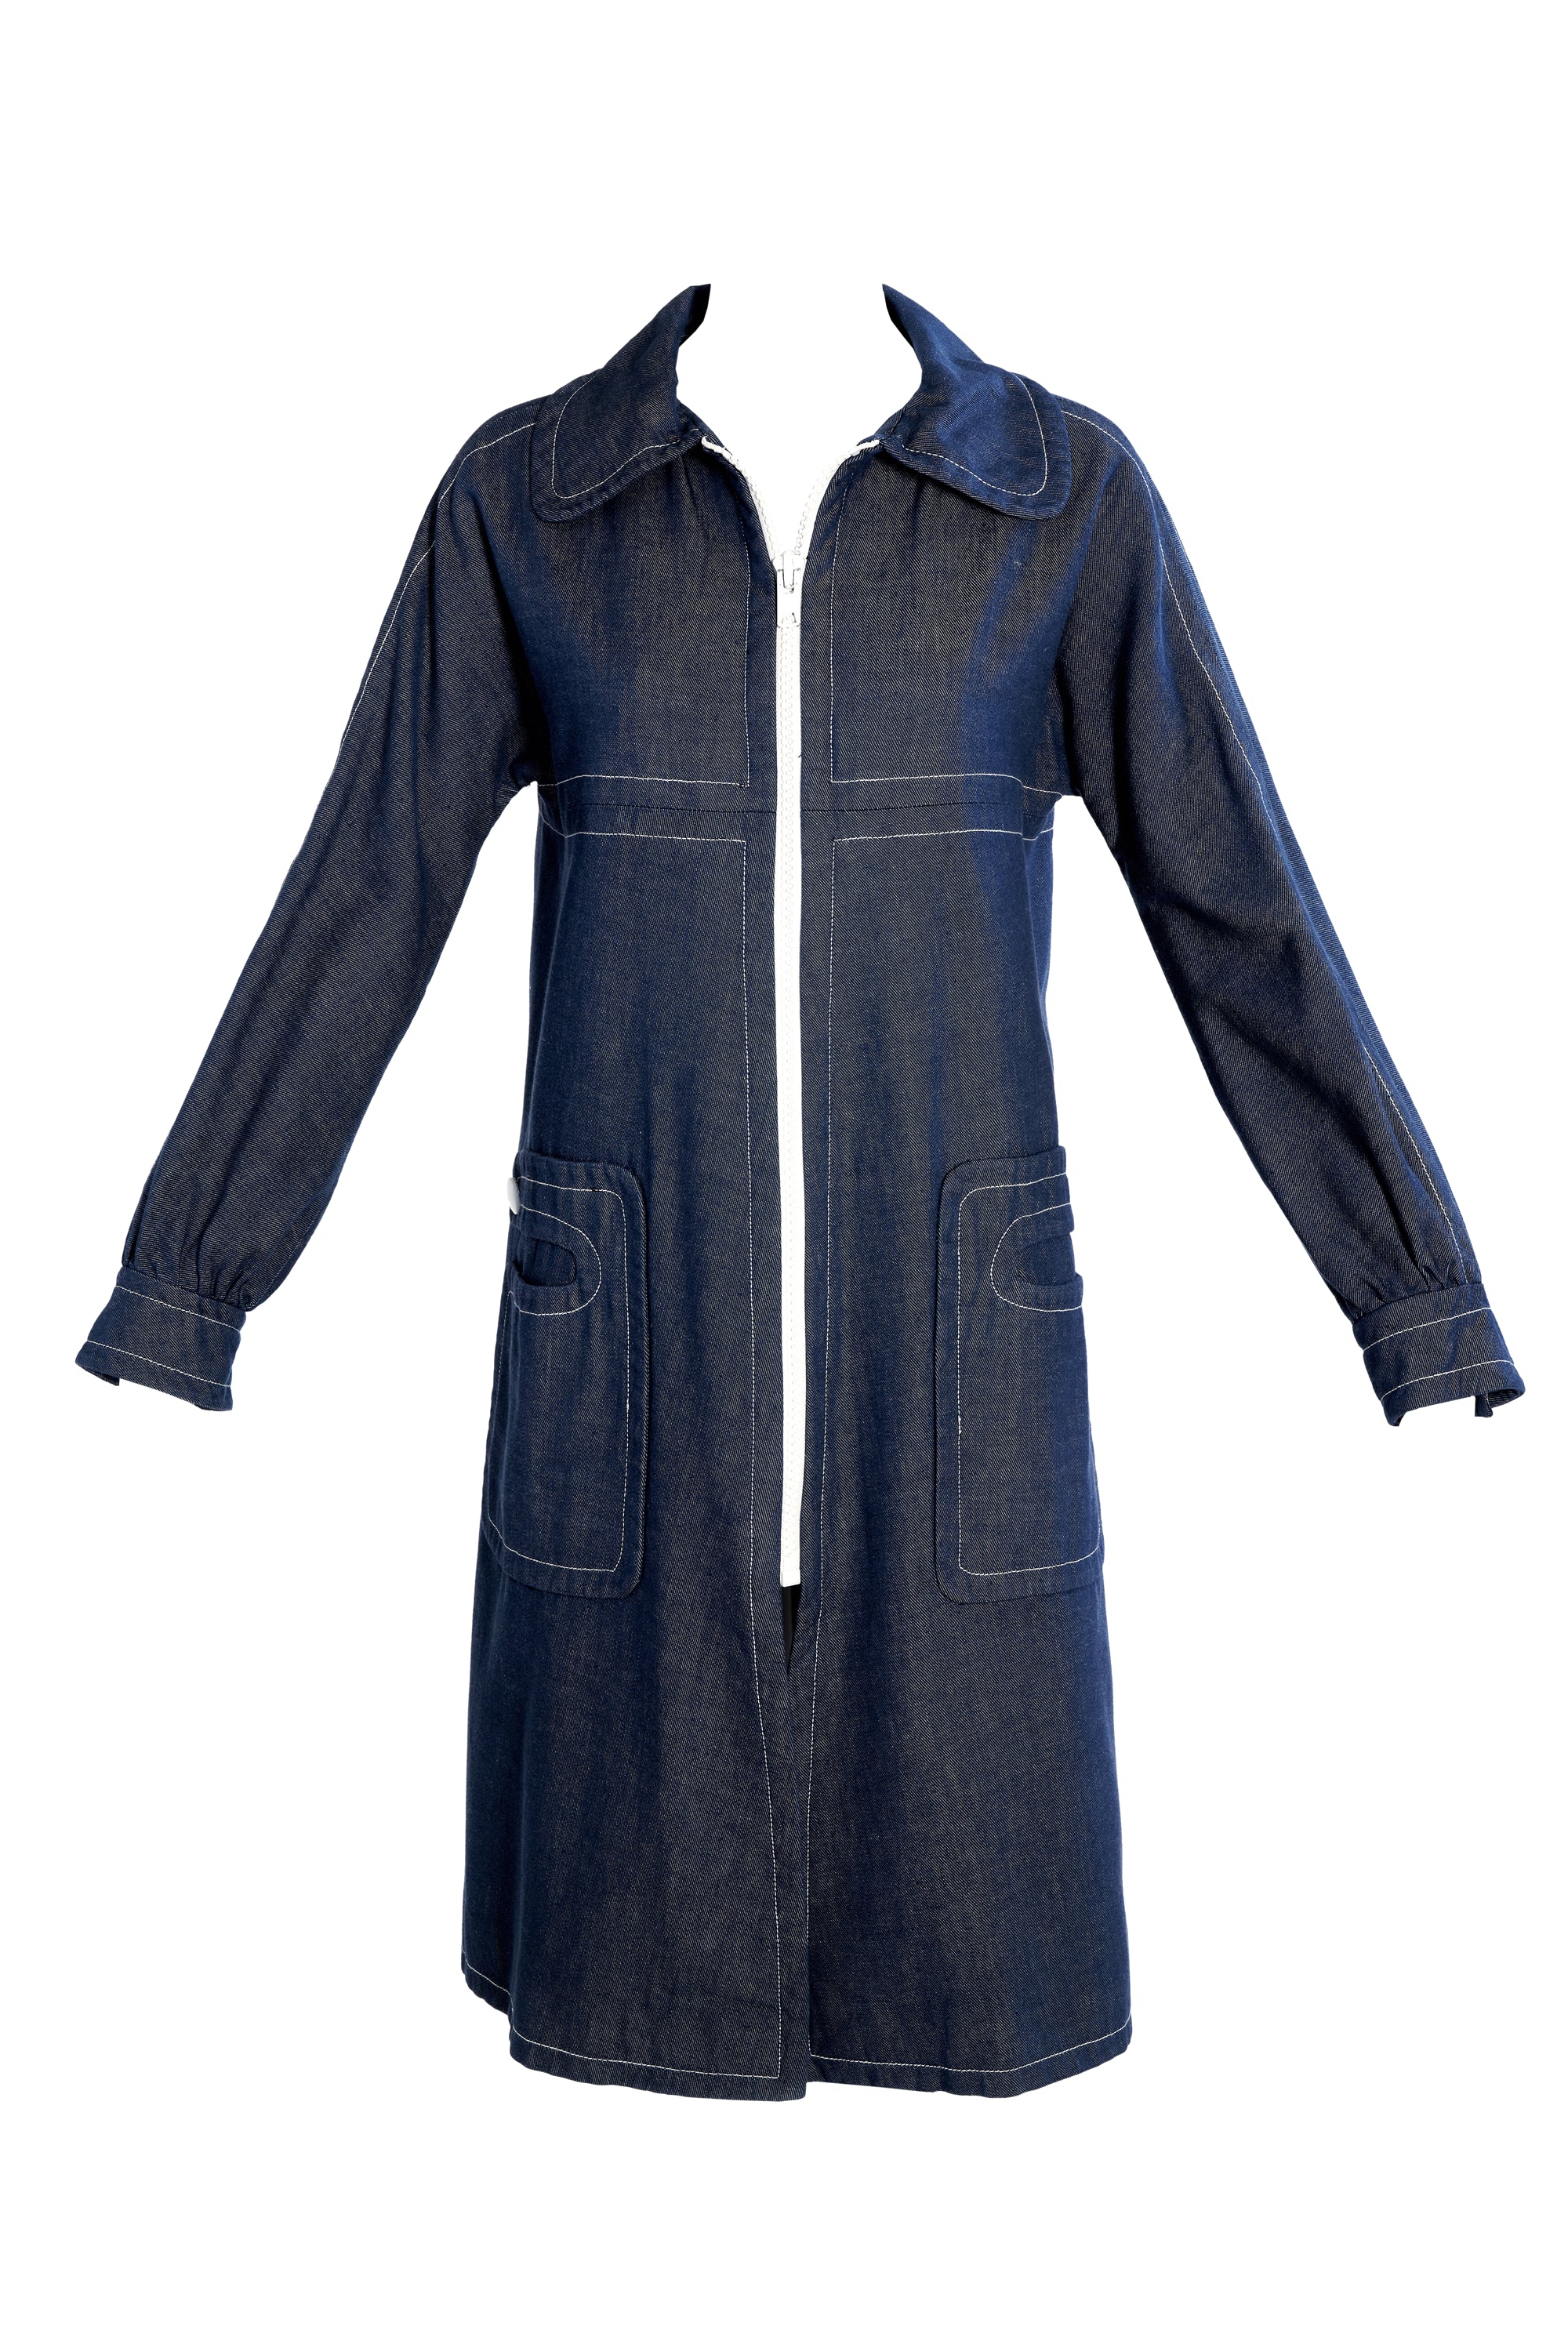 Pierre Cardin Vintage Denim Coat Mini MOD 1960’s Dress